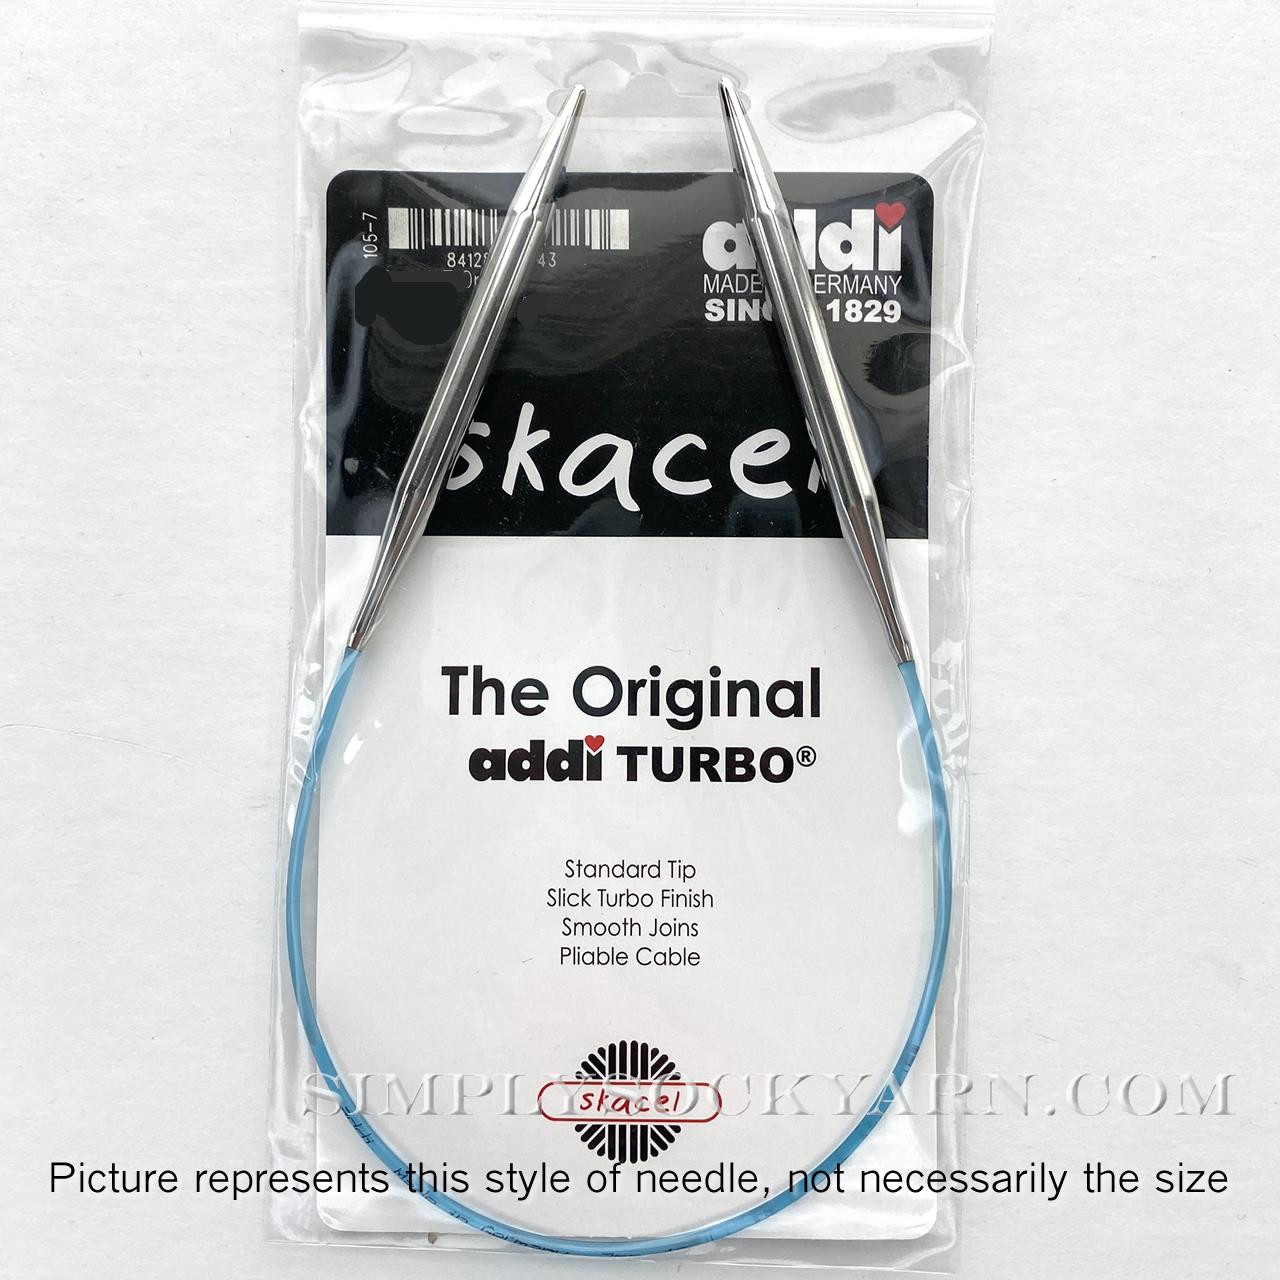  Addi Turbo 16 Circular Knitting Needles by SKACEL Size 8